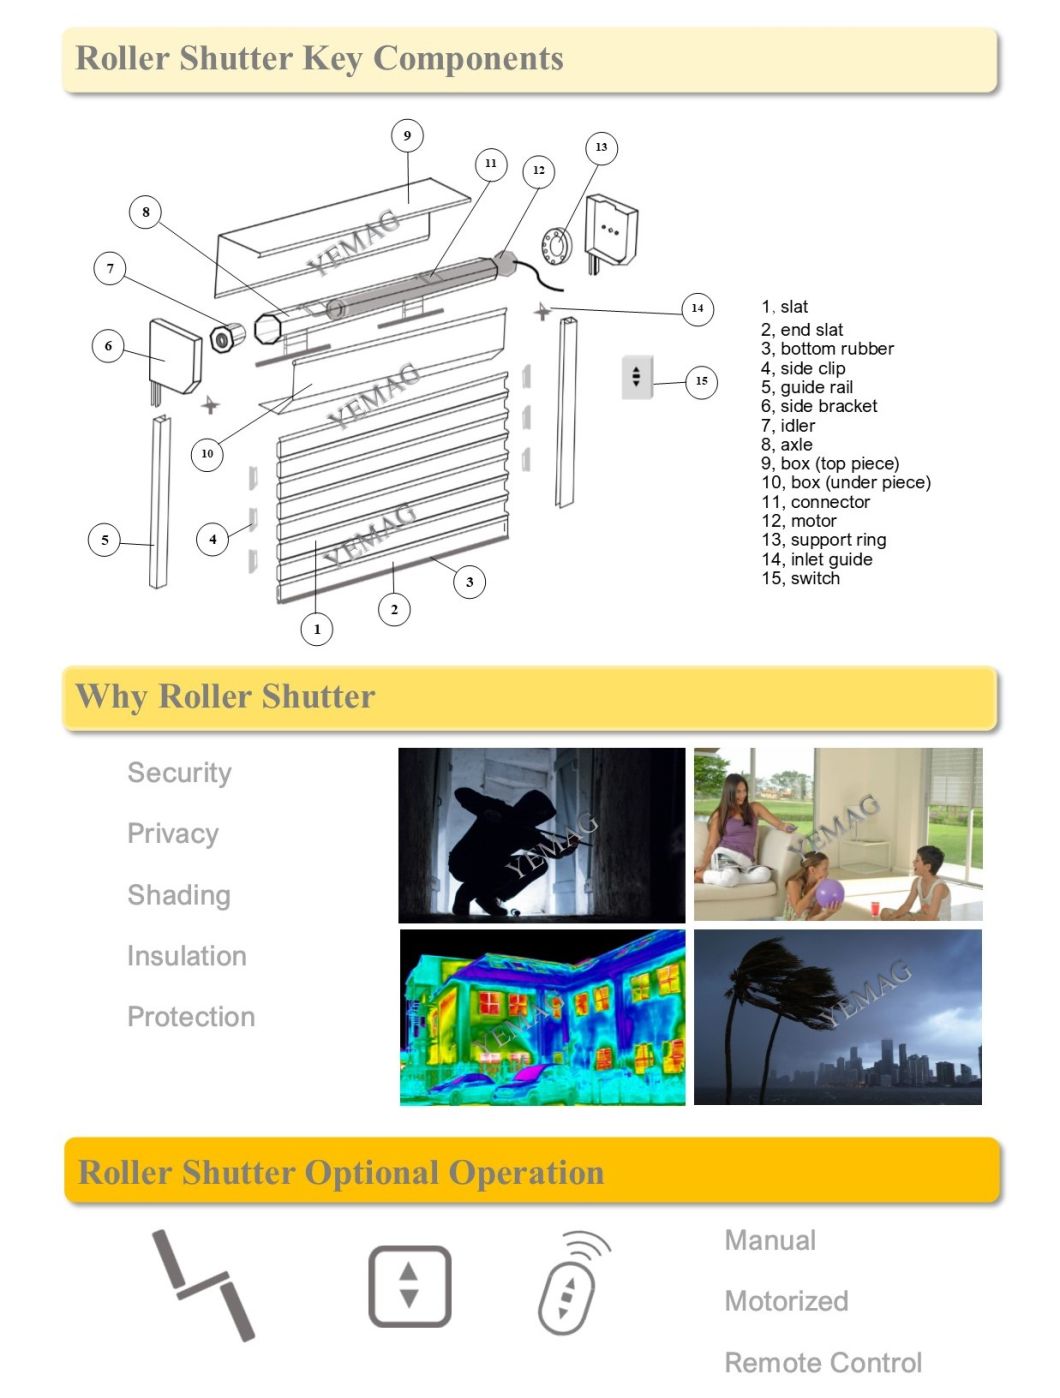 Manual Electrical Roller Shutter Window / Rolling Blinds / Roller Blinds / Vertical Blinds with Tubular Motor